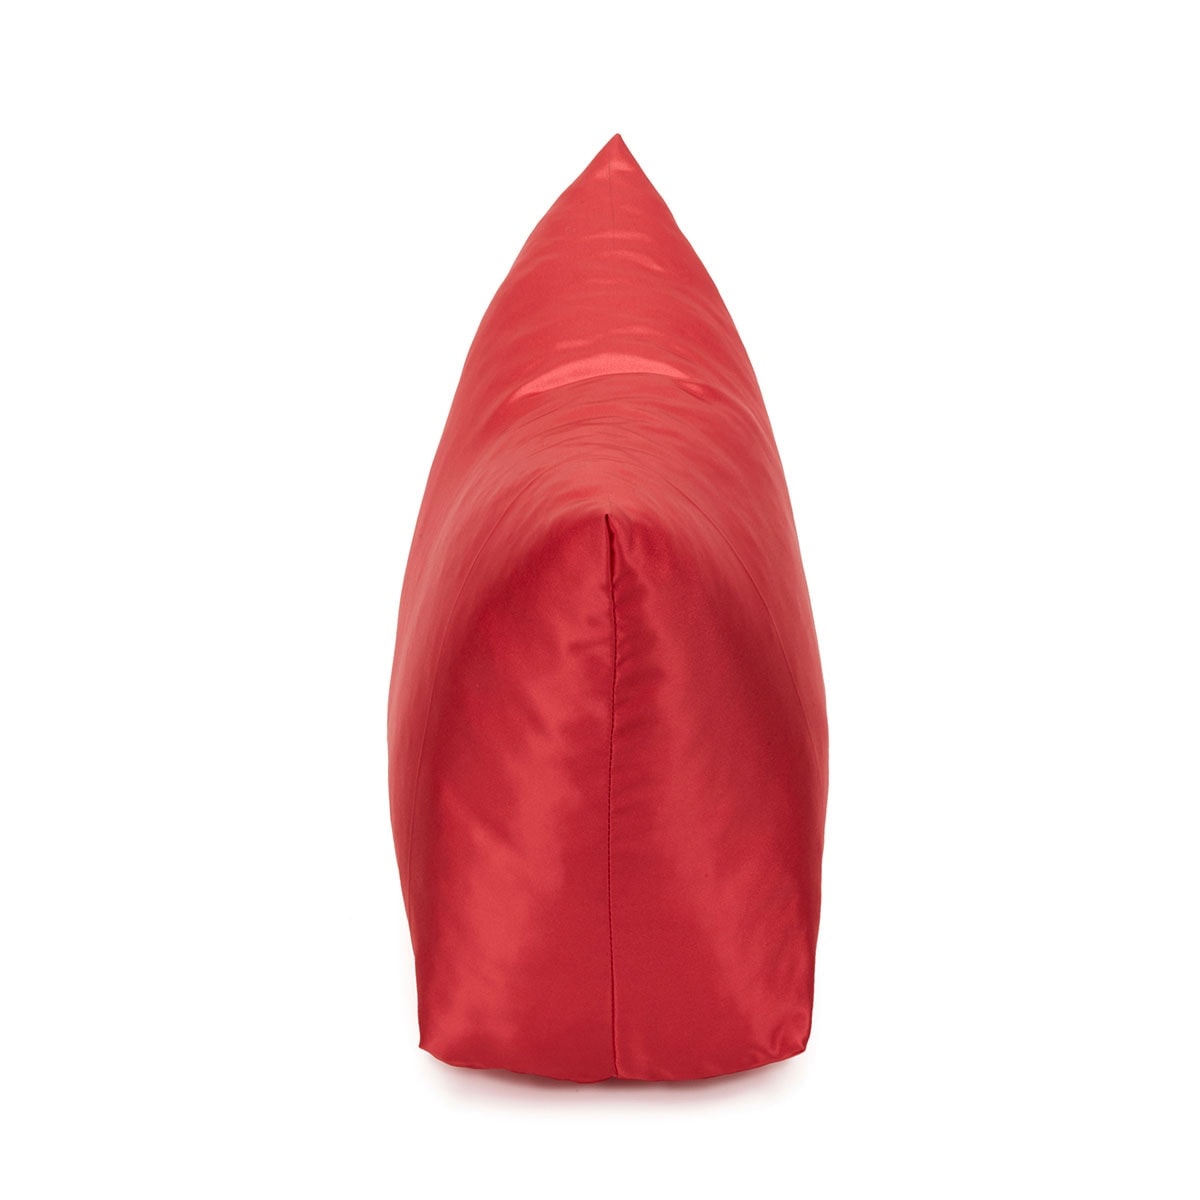 Purse Pillow for Louis Vuitton Neverfull Bag Models, Bag Shaper